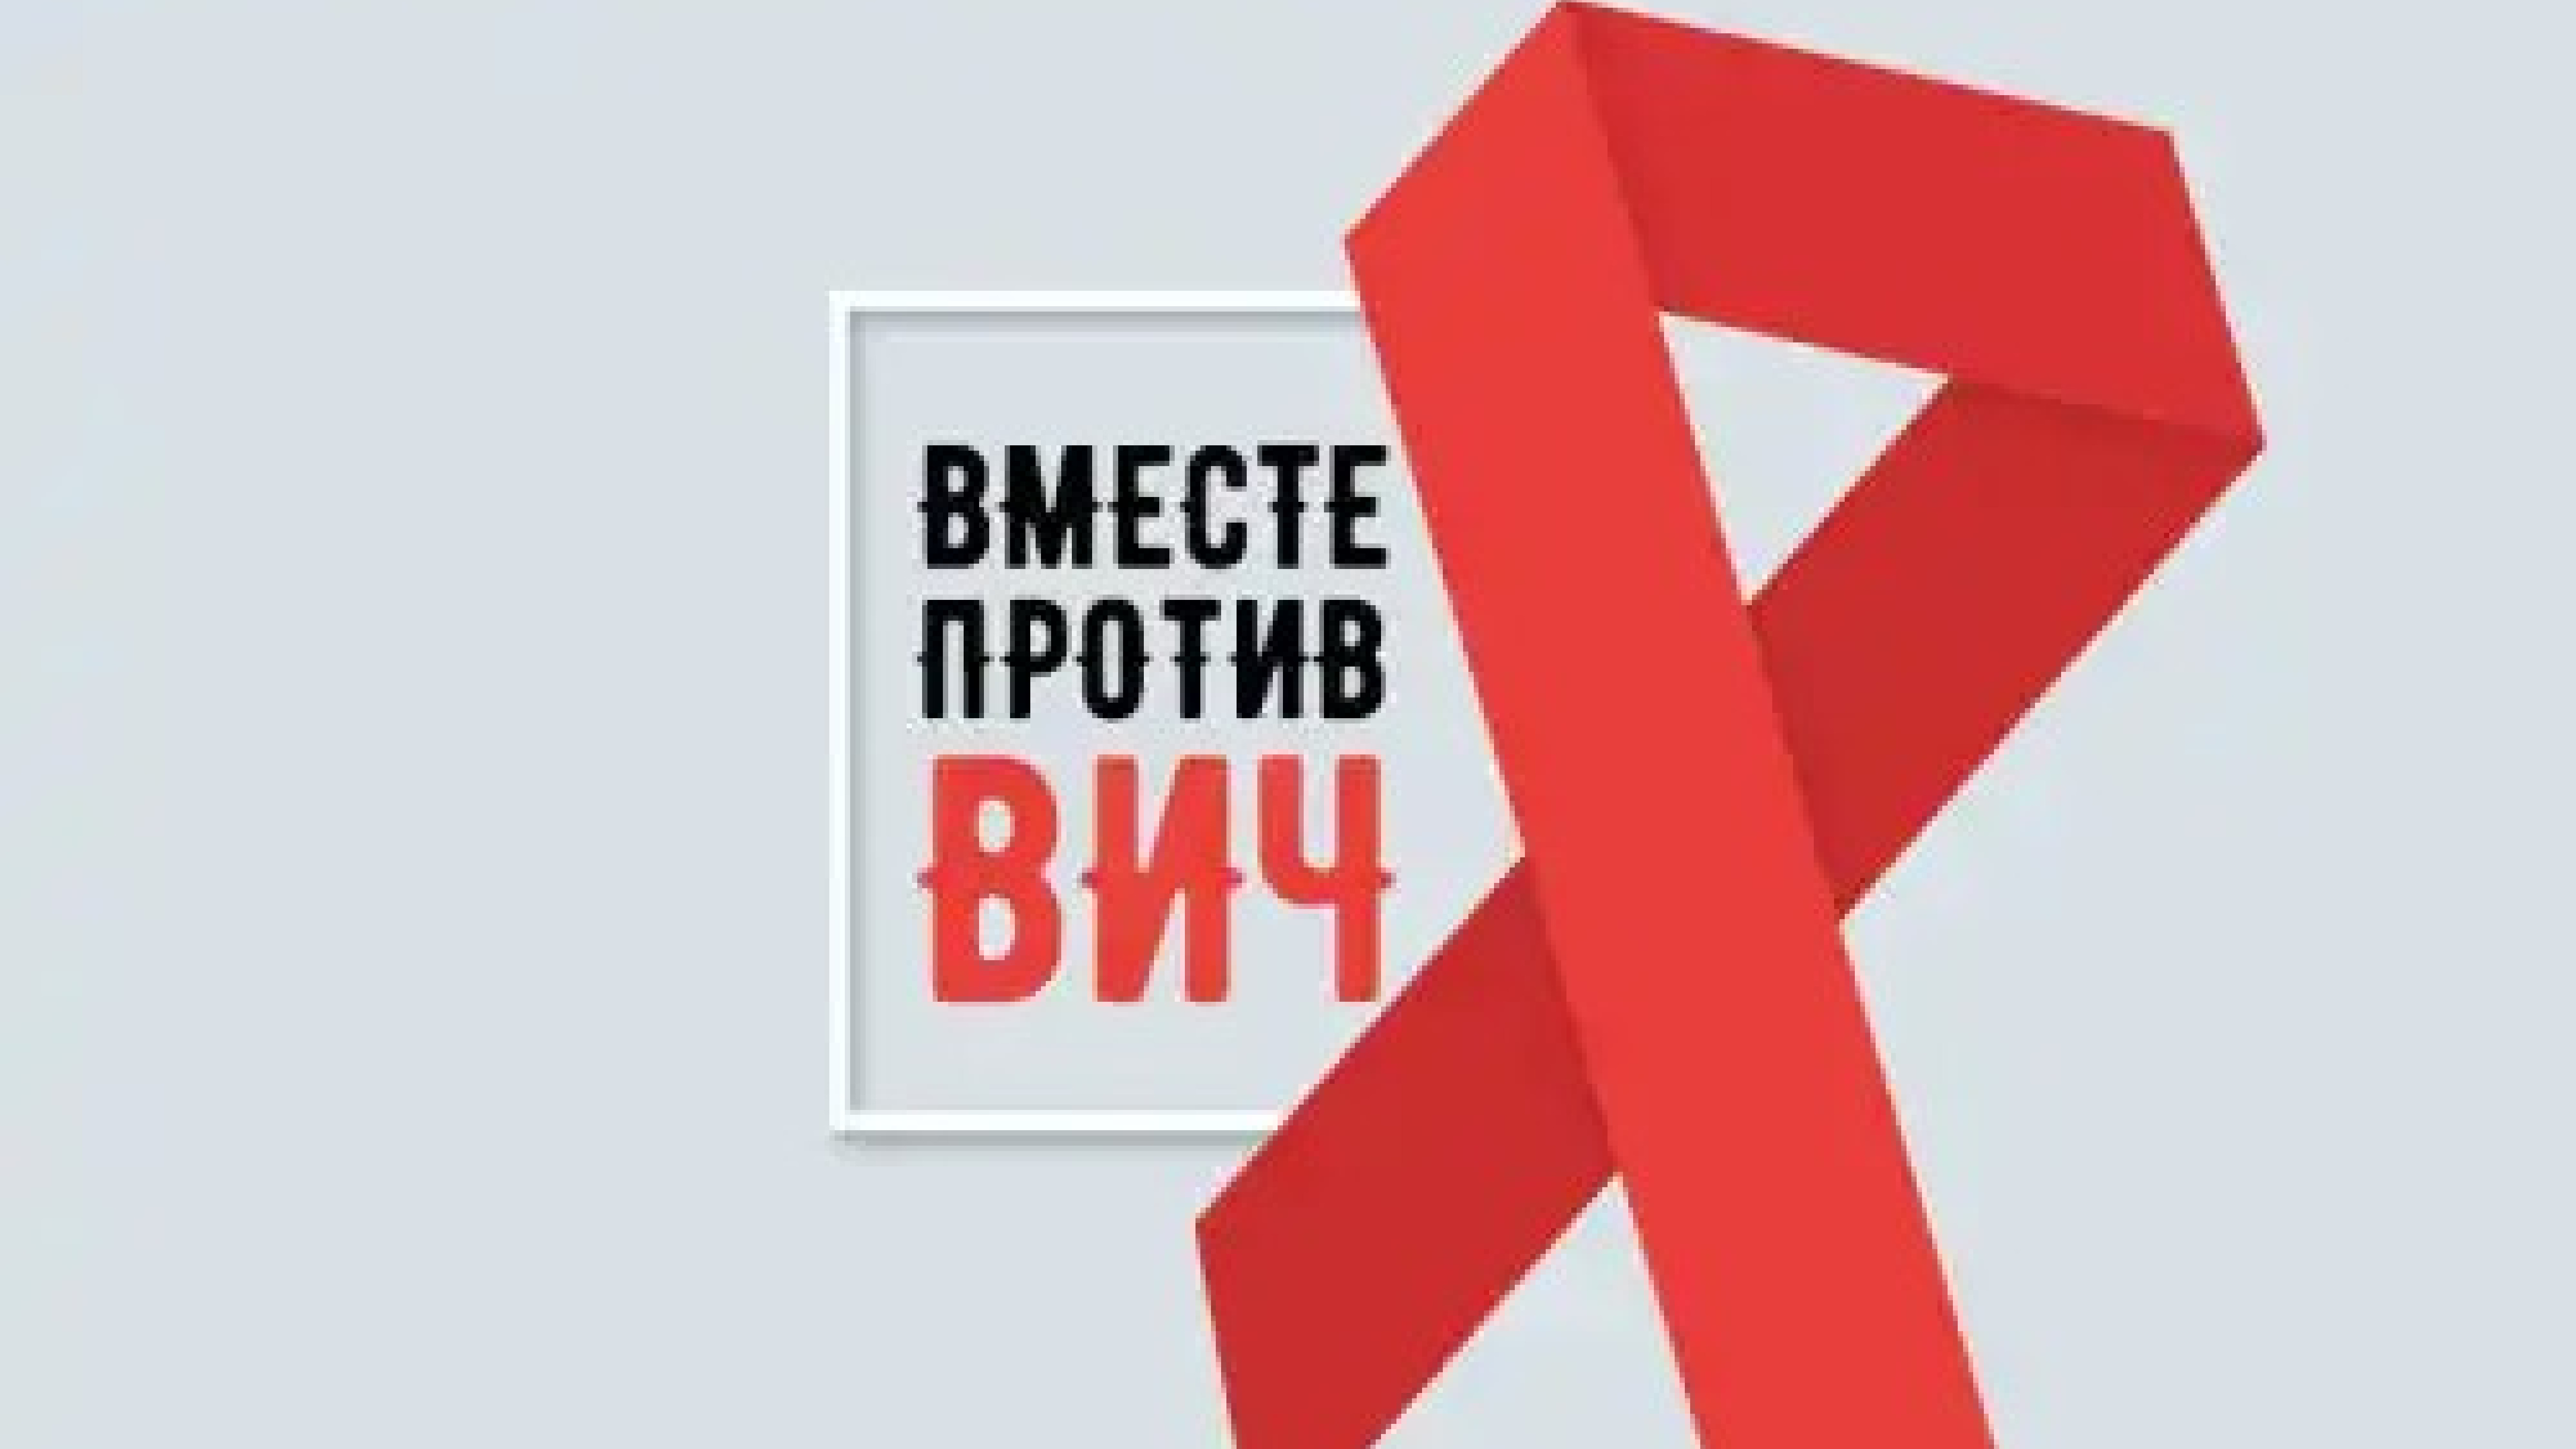 Спид вместе. Против СПИДА. Мы против ВИЧ. Слоган против СПИДА. Вместе против ВИЧ.